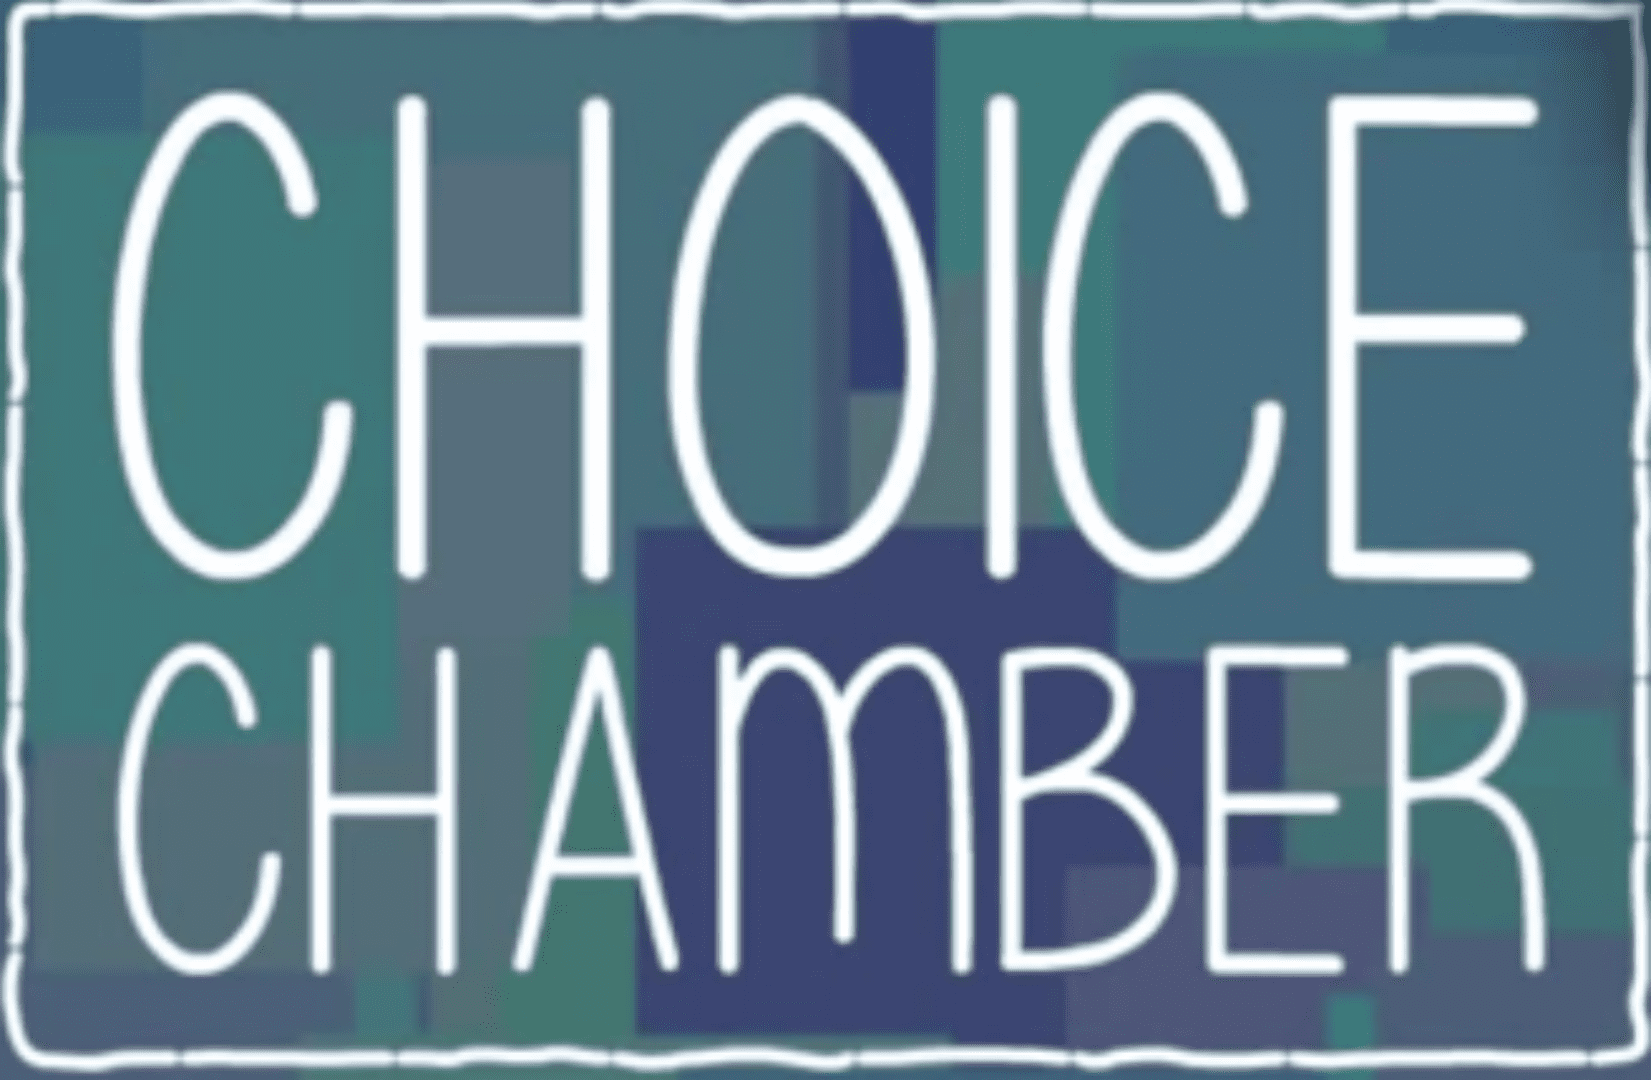 IndieCade 2014: Choice Chamber